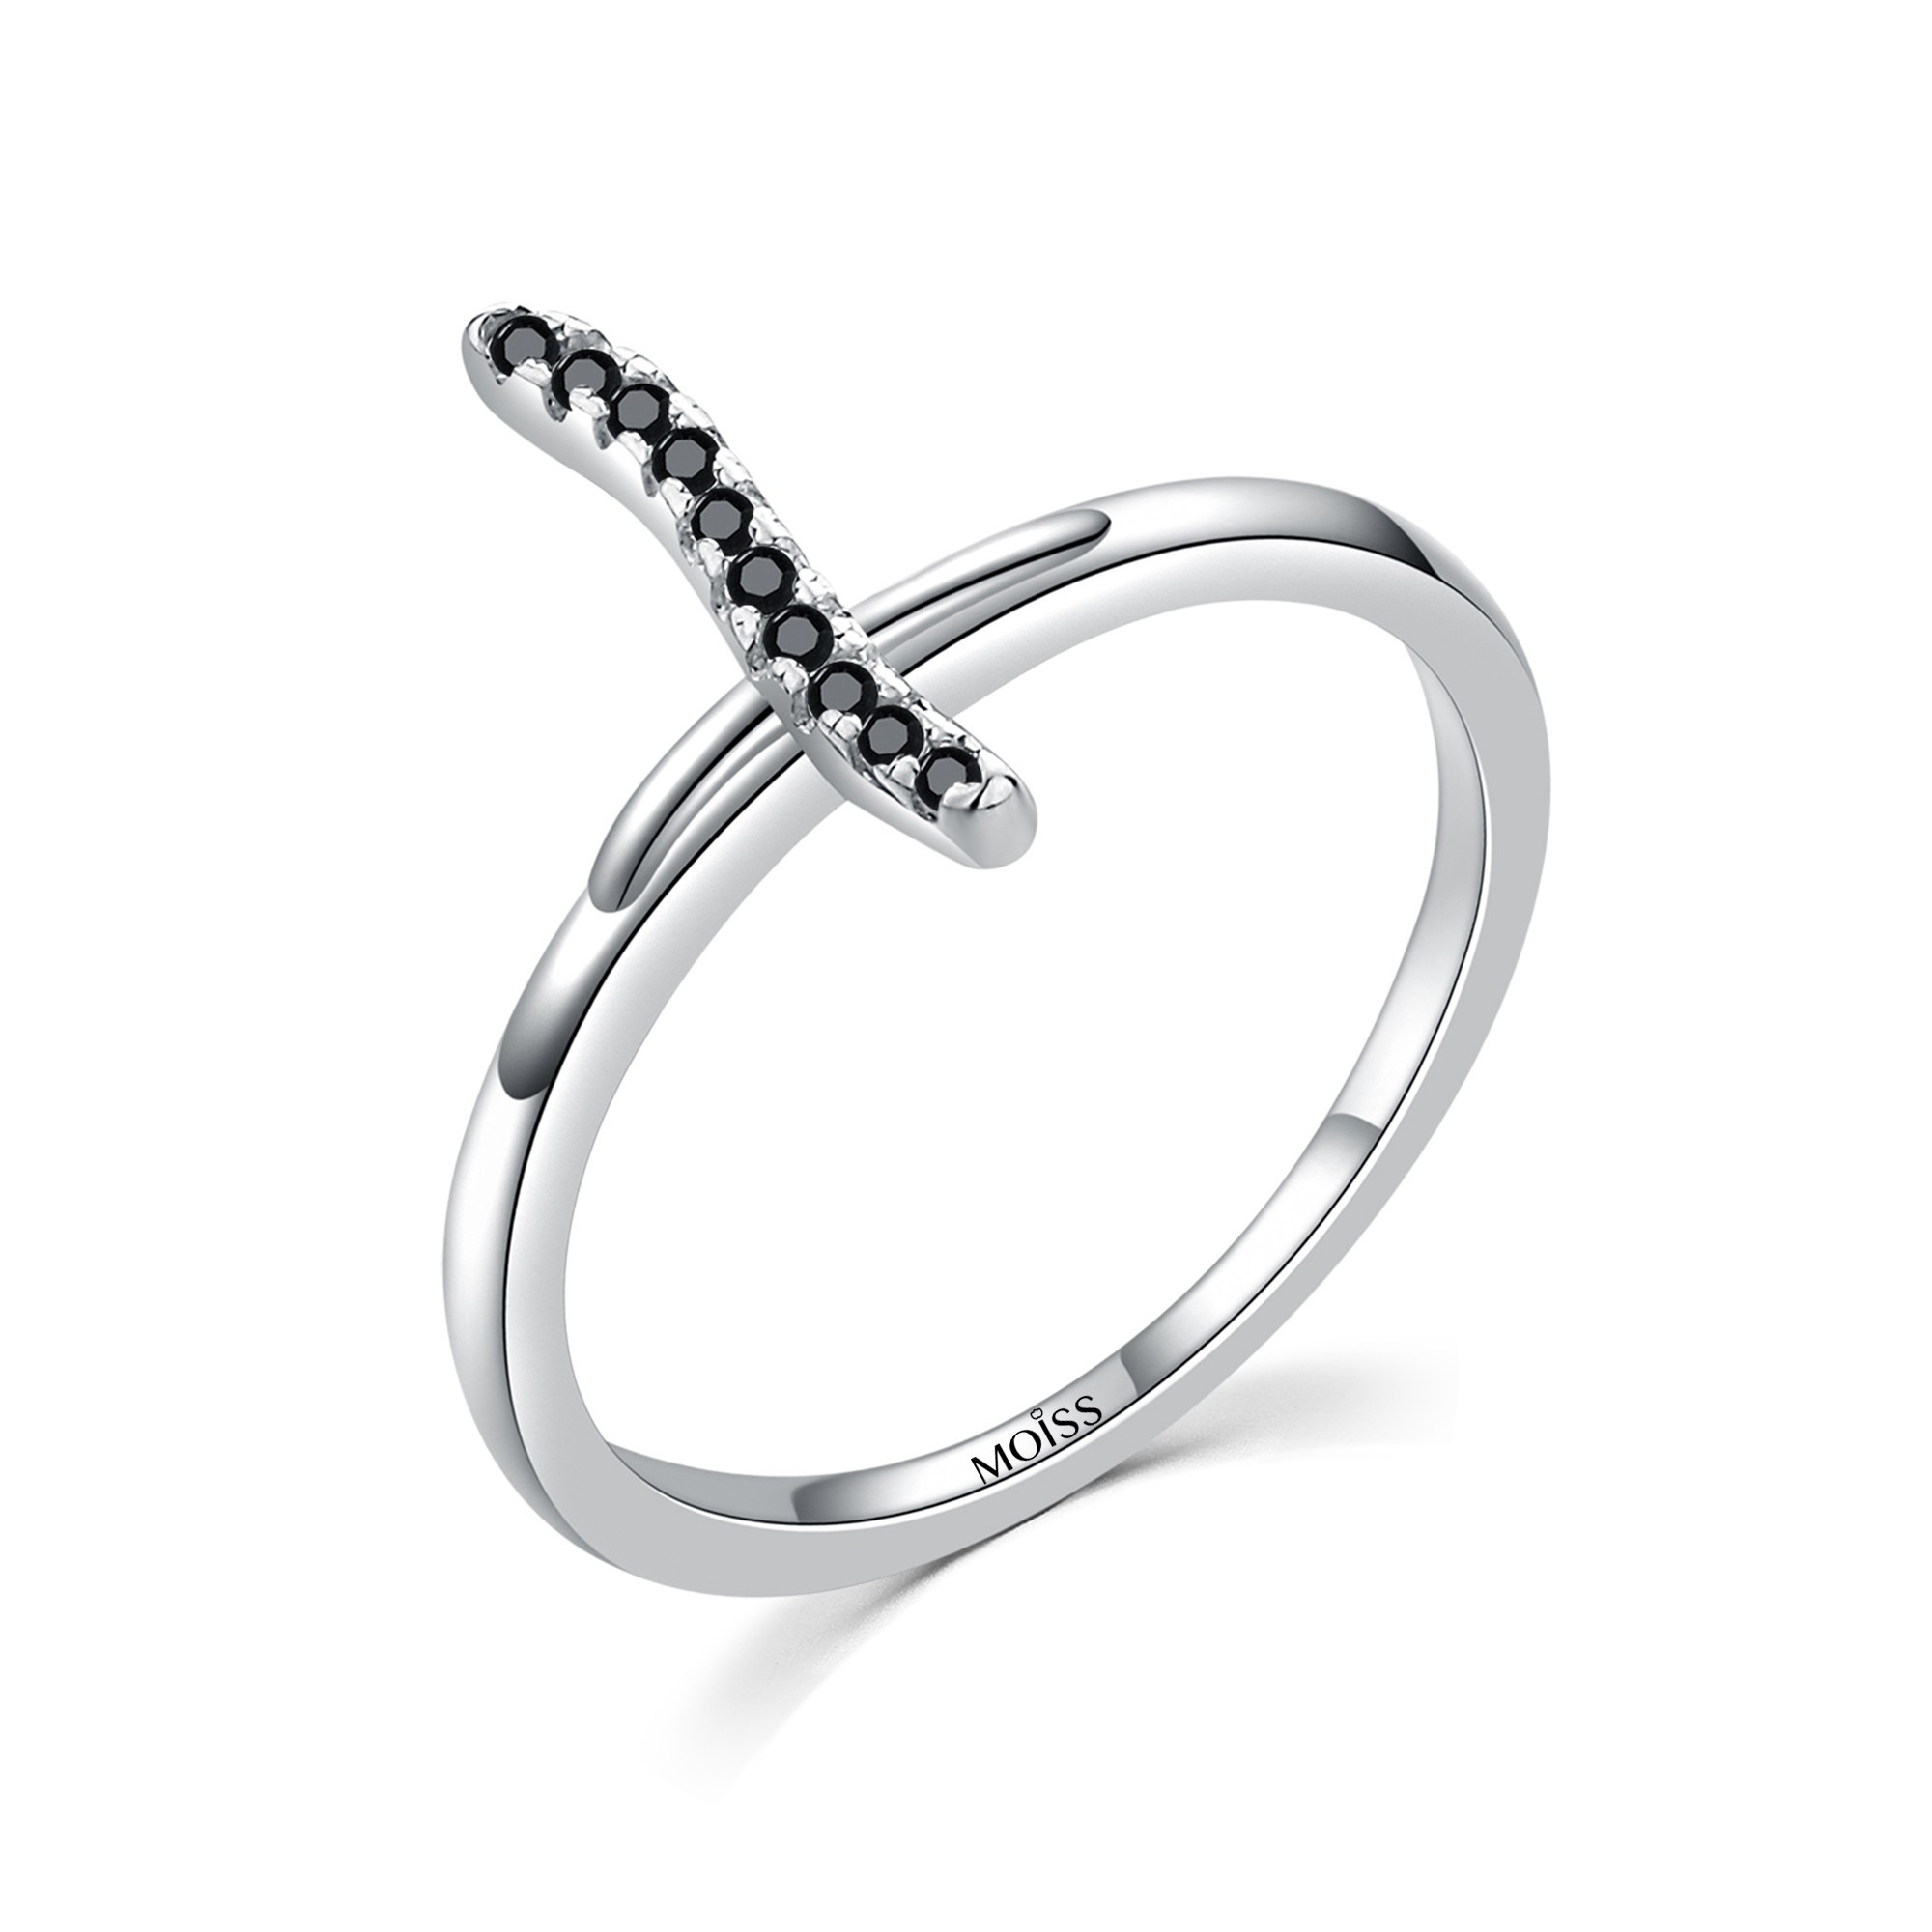 MOISS Moiss stříbrný prsten KŘÍŽEK s černým zirkonem R0002039 Velikost 49 mm R0002039